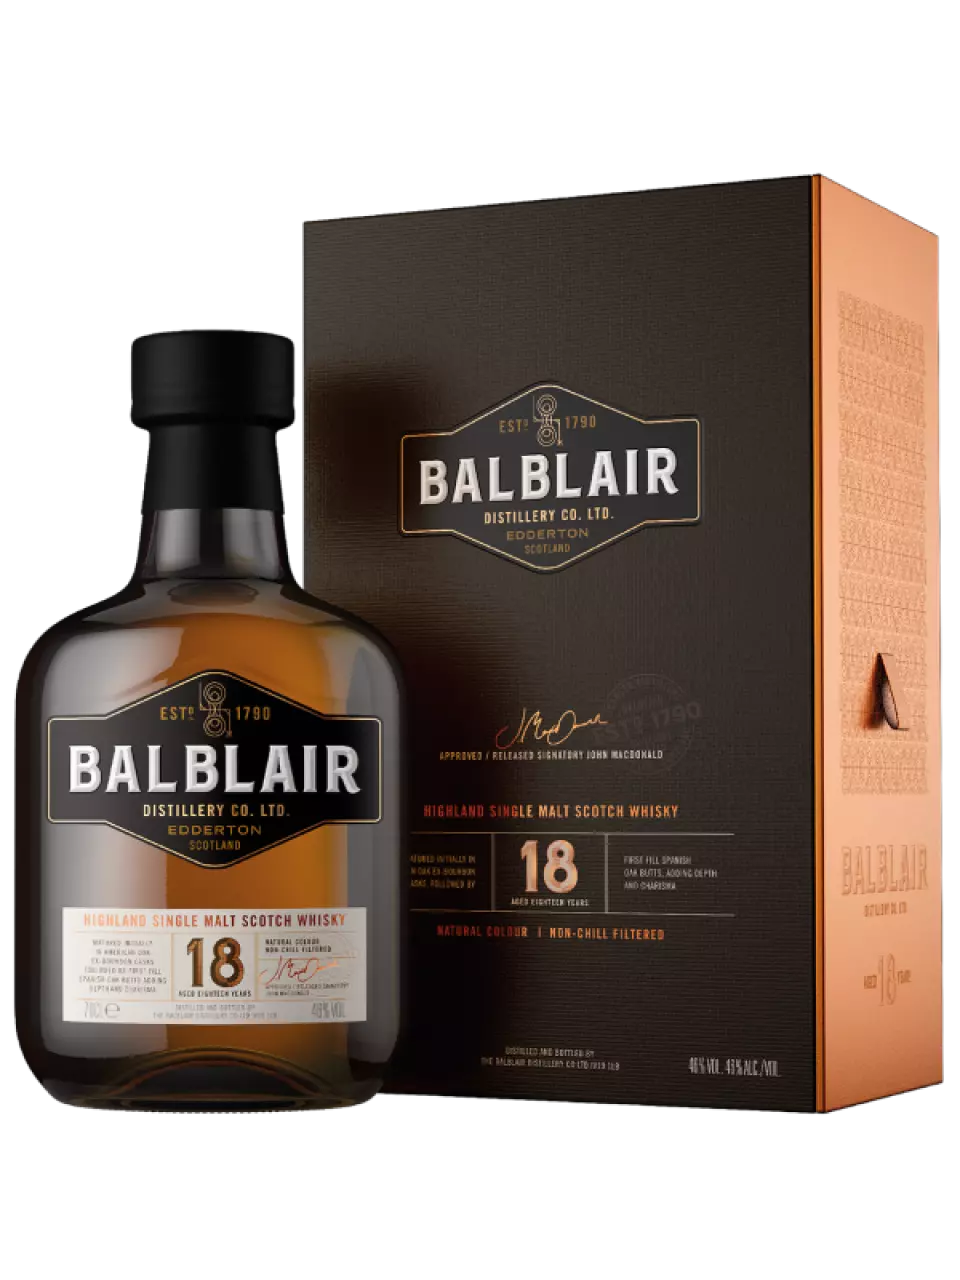 Balblair 18 Year Old The Balblair Collection whisky listing